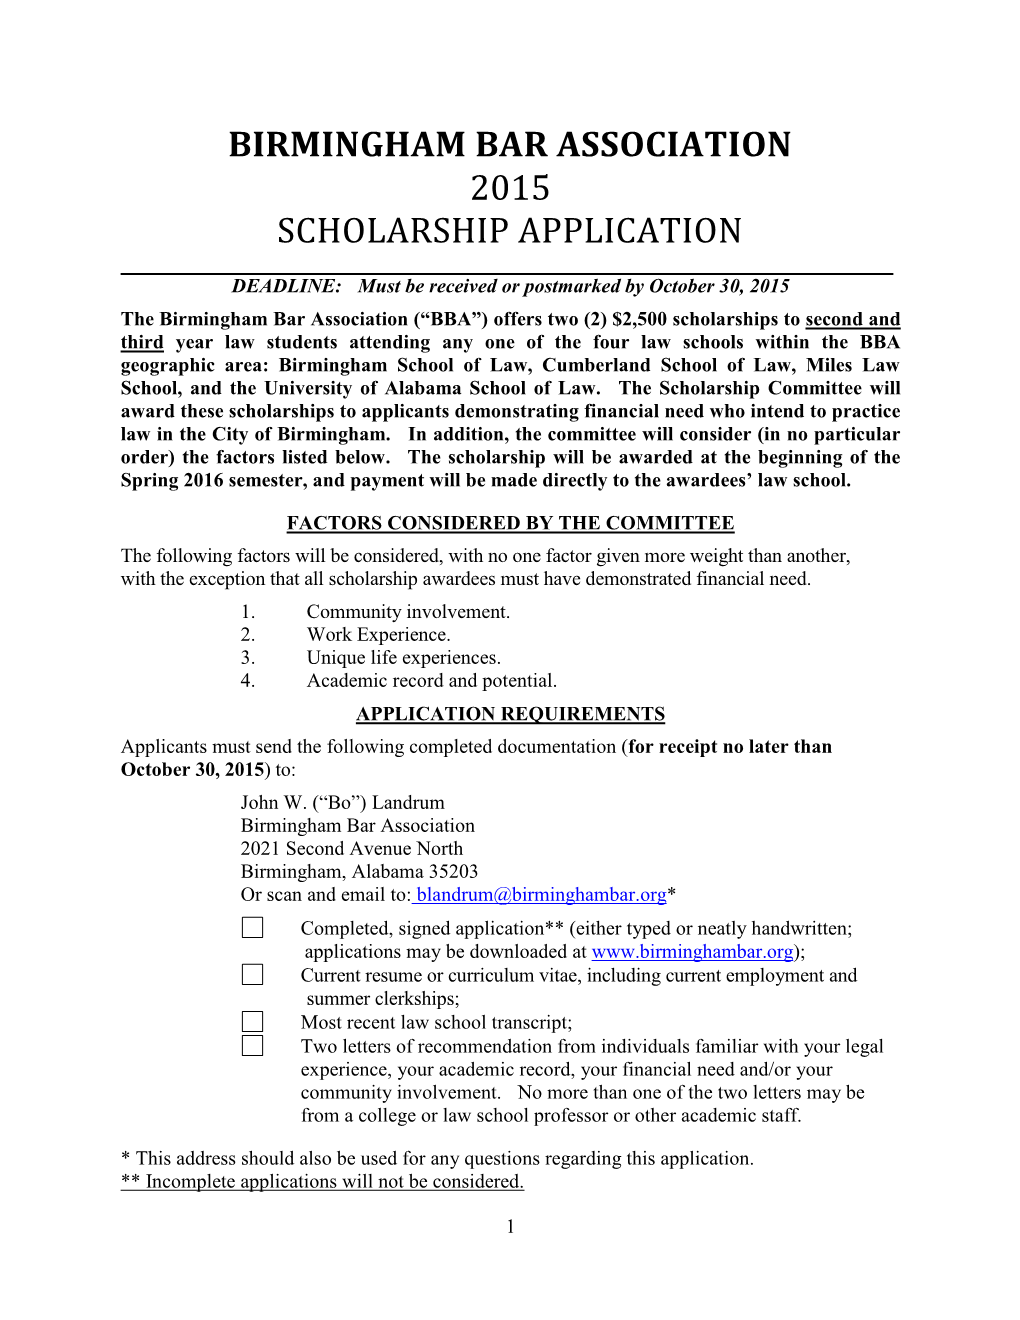 Birmingham Bar Association 2015 Scholarship Application